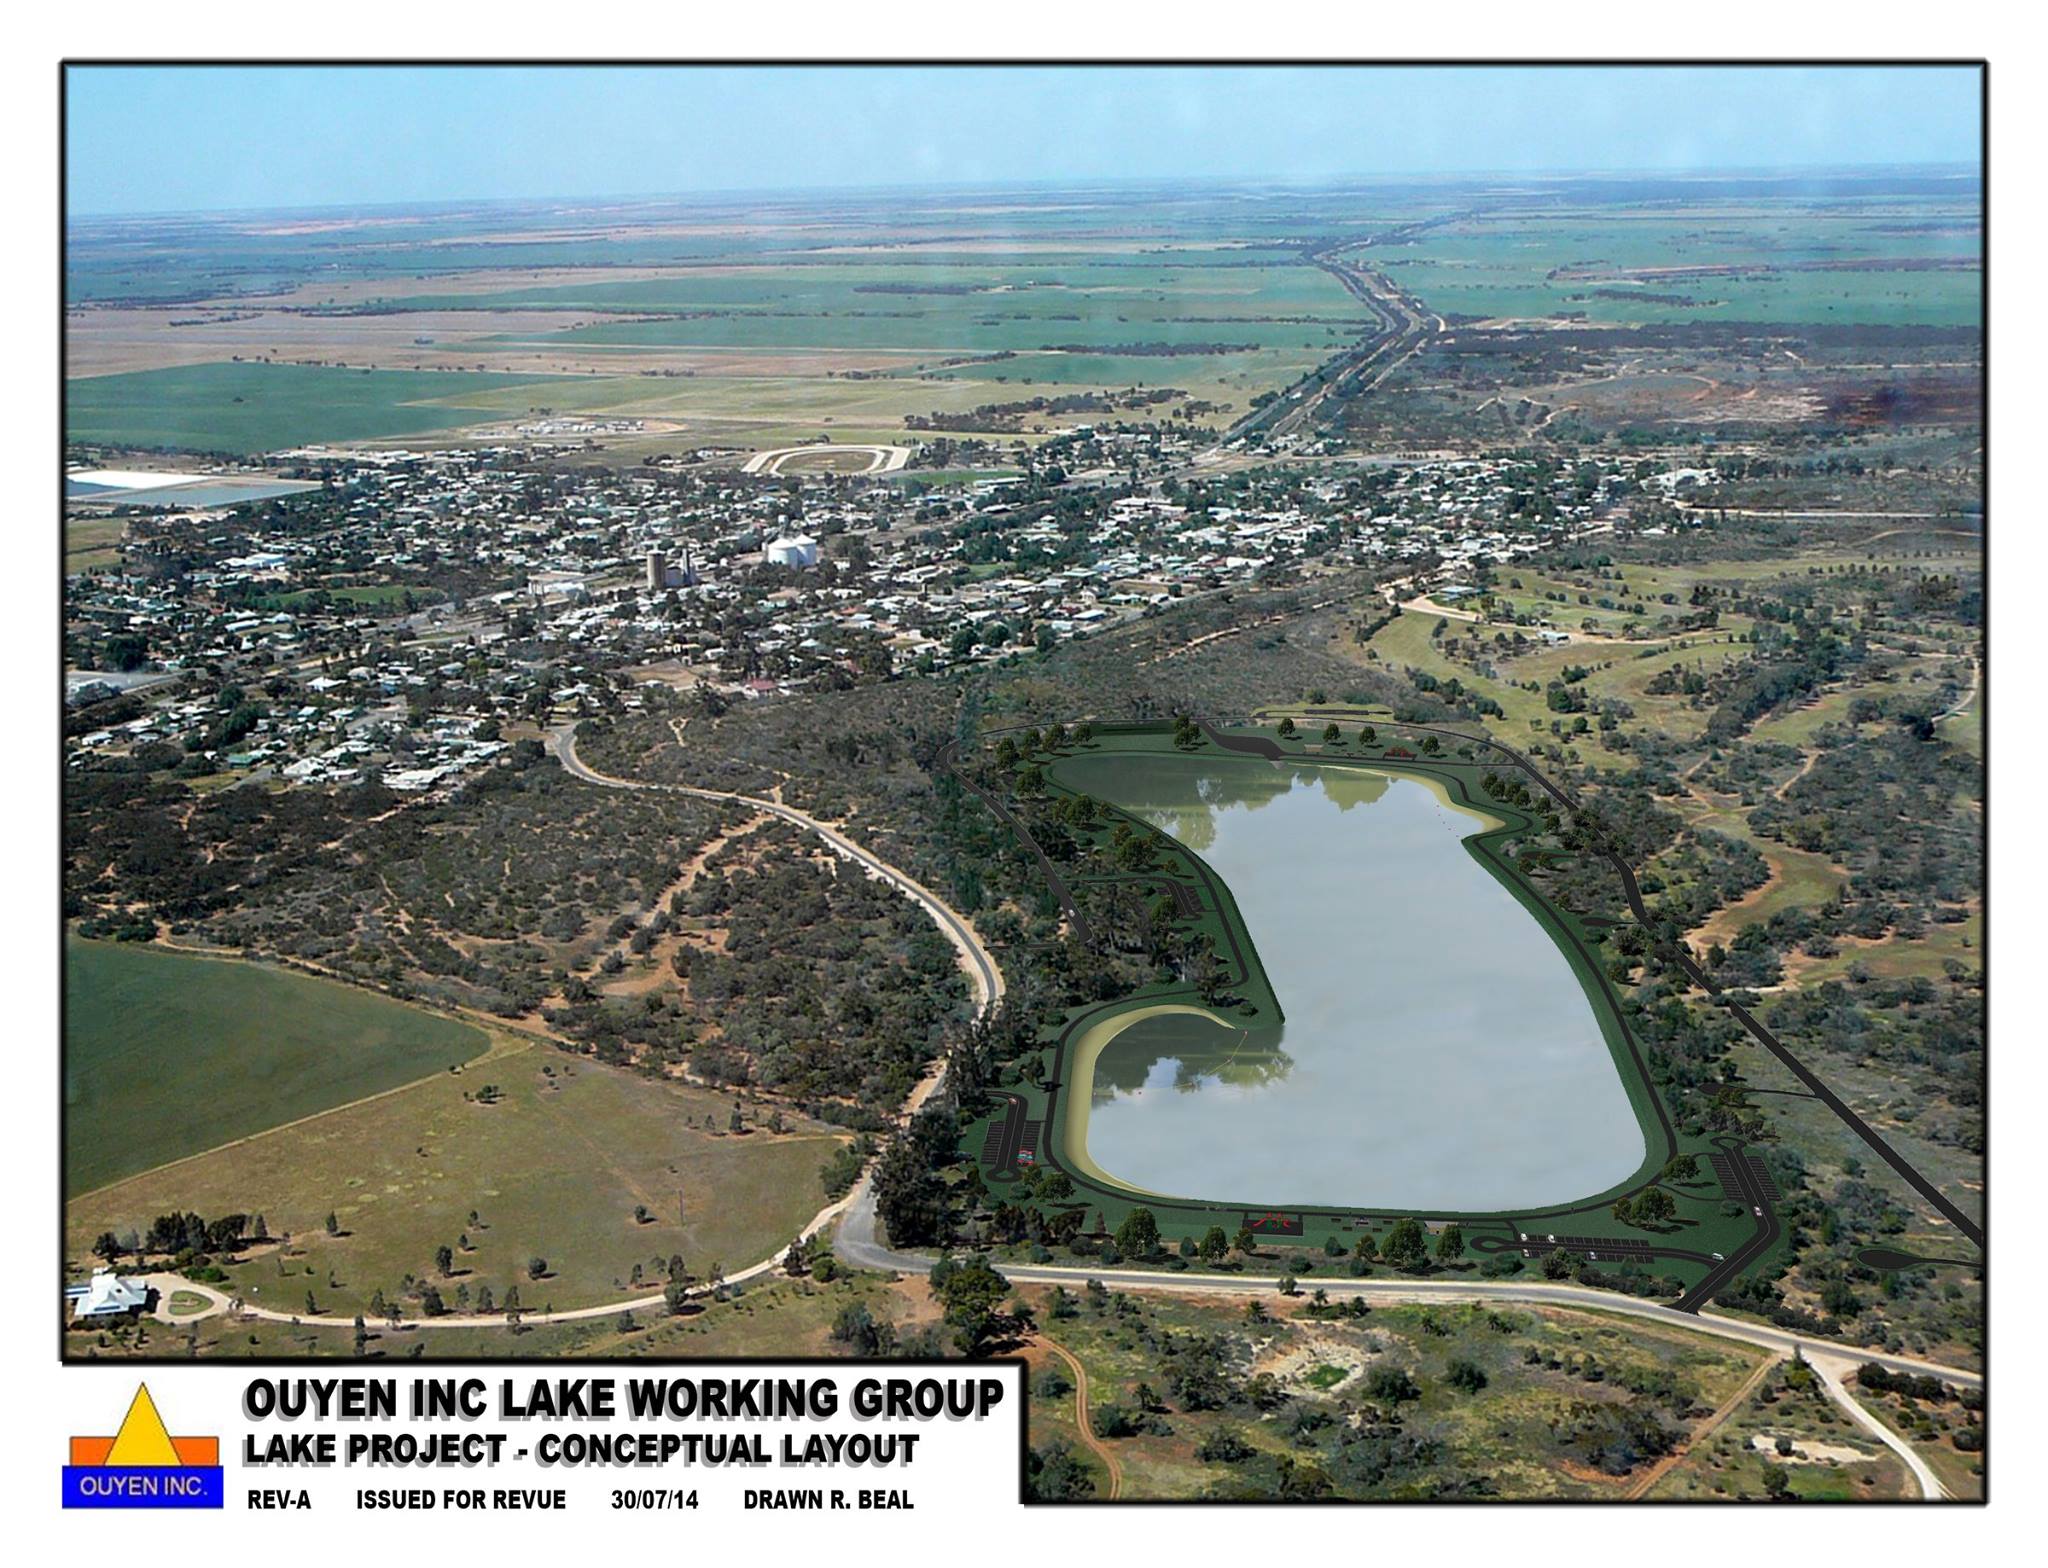 Conceptual layout of Ouyen Lake